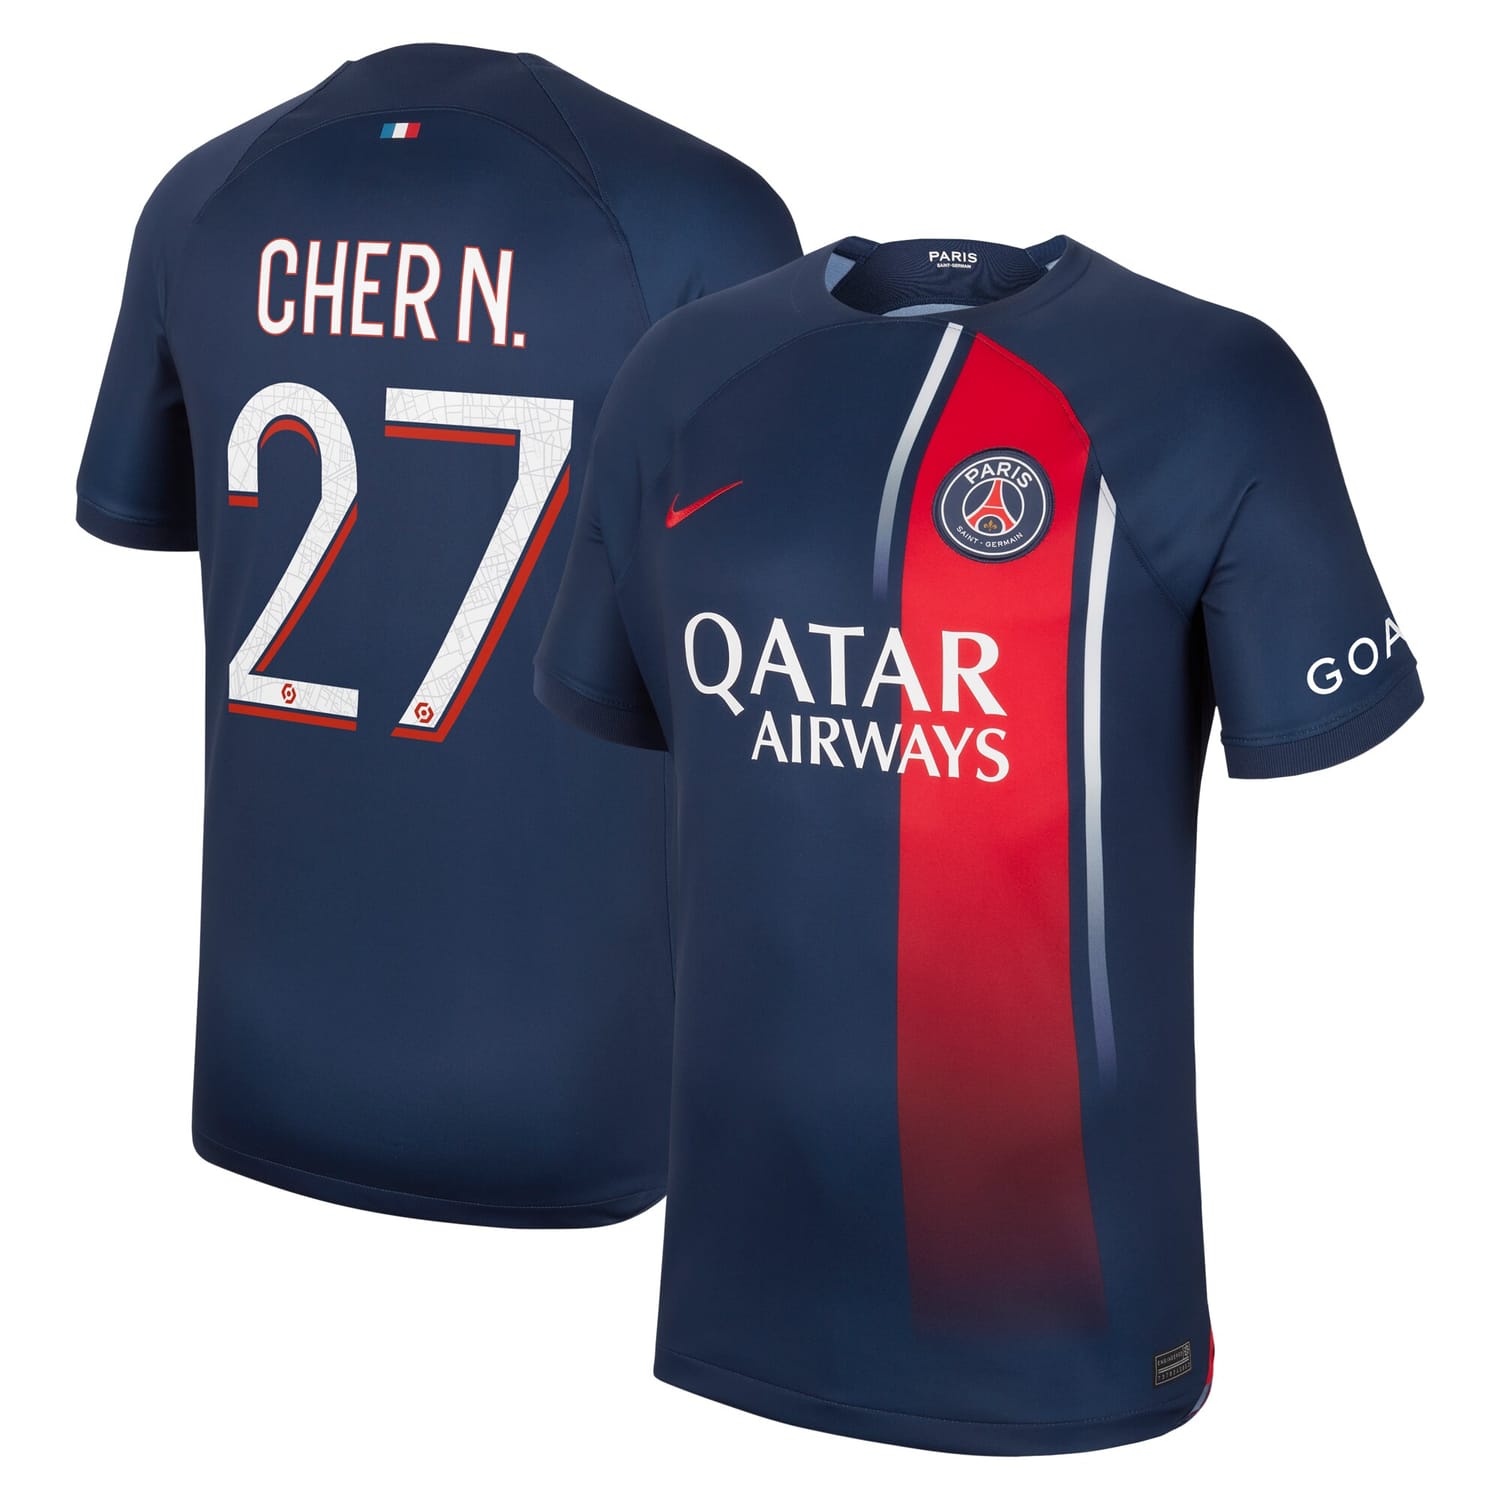 Ligue 1 Paris Saint-Germain Home Jersey Shirt 2023-24 player Cher N. 27 printing for Men